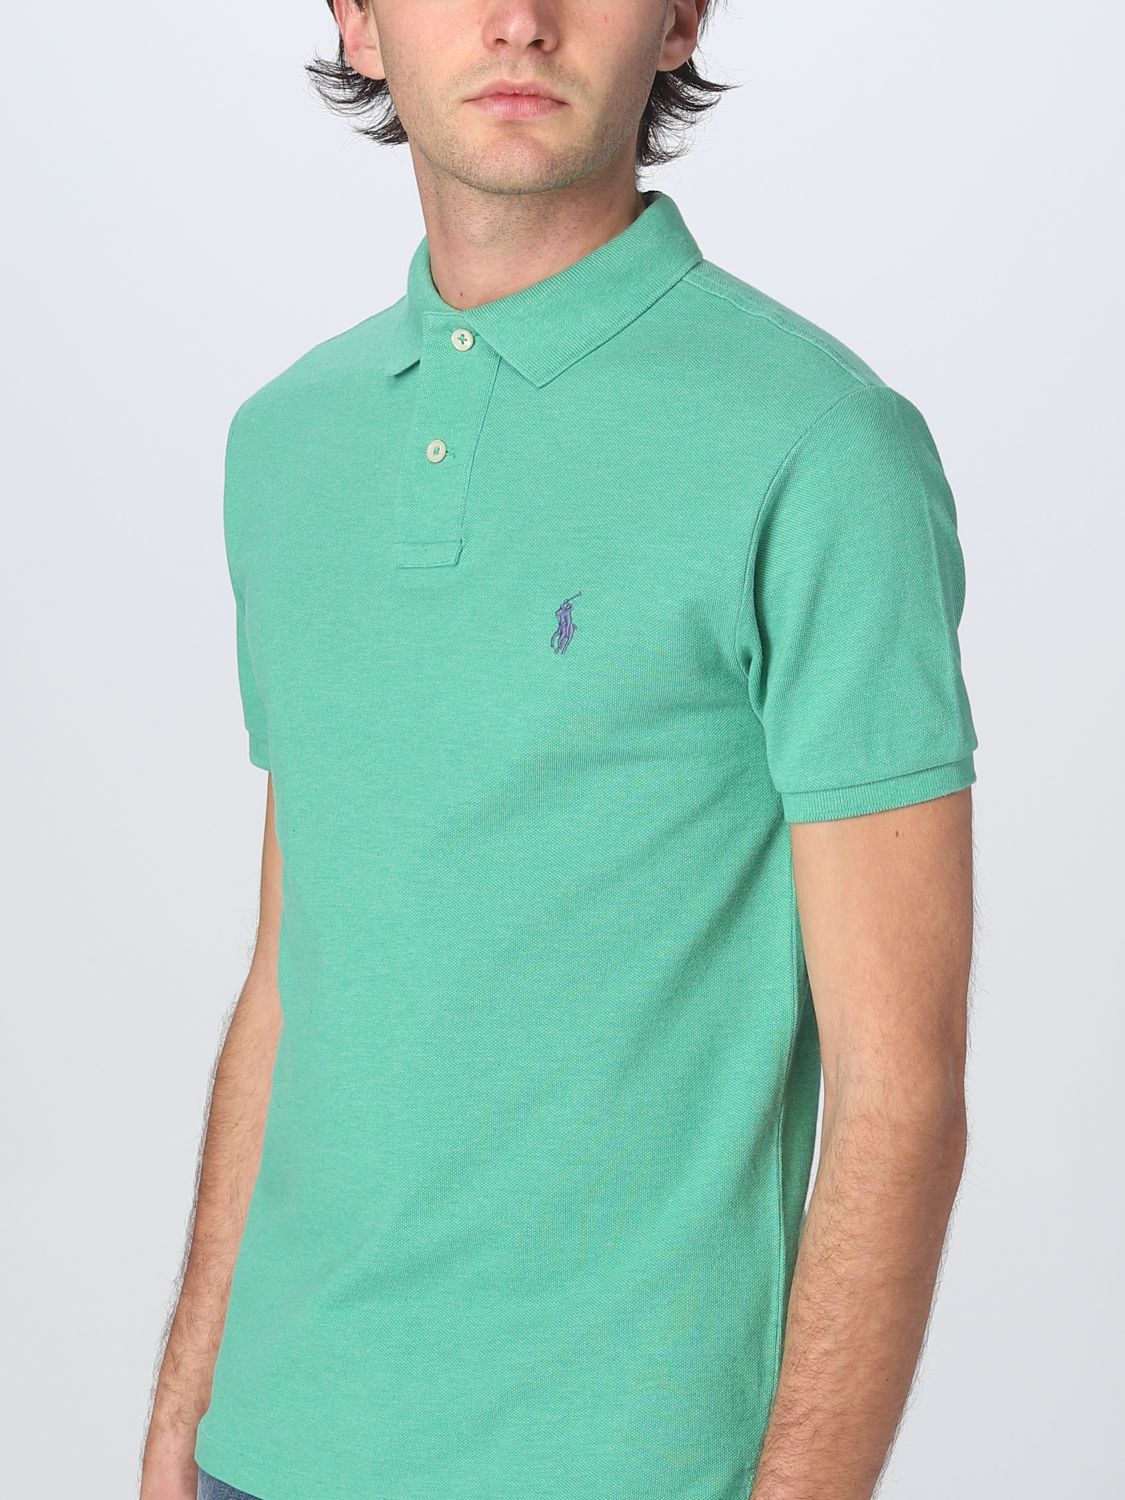 POLO RALPH LAUREN: polo shirt for man - Green | Polo Ralph Lauren polo shirt 710536856 online on GIGLIO.COM